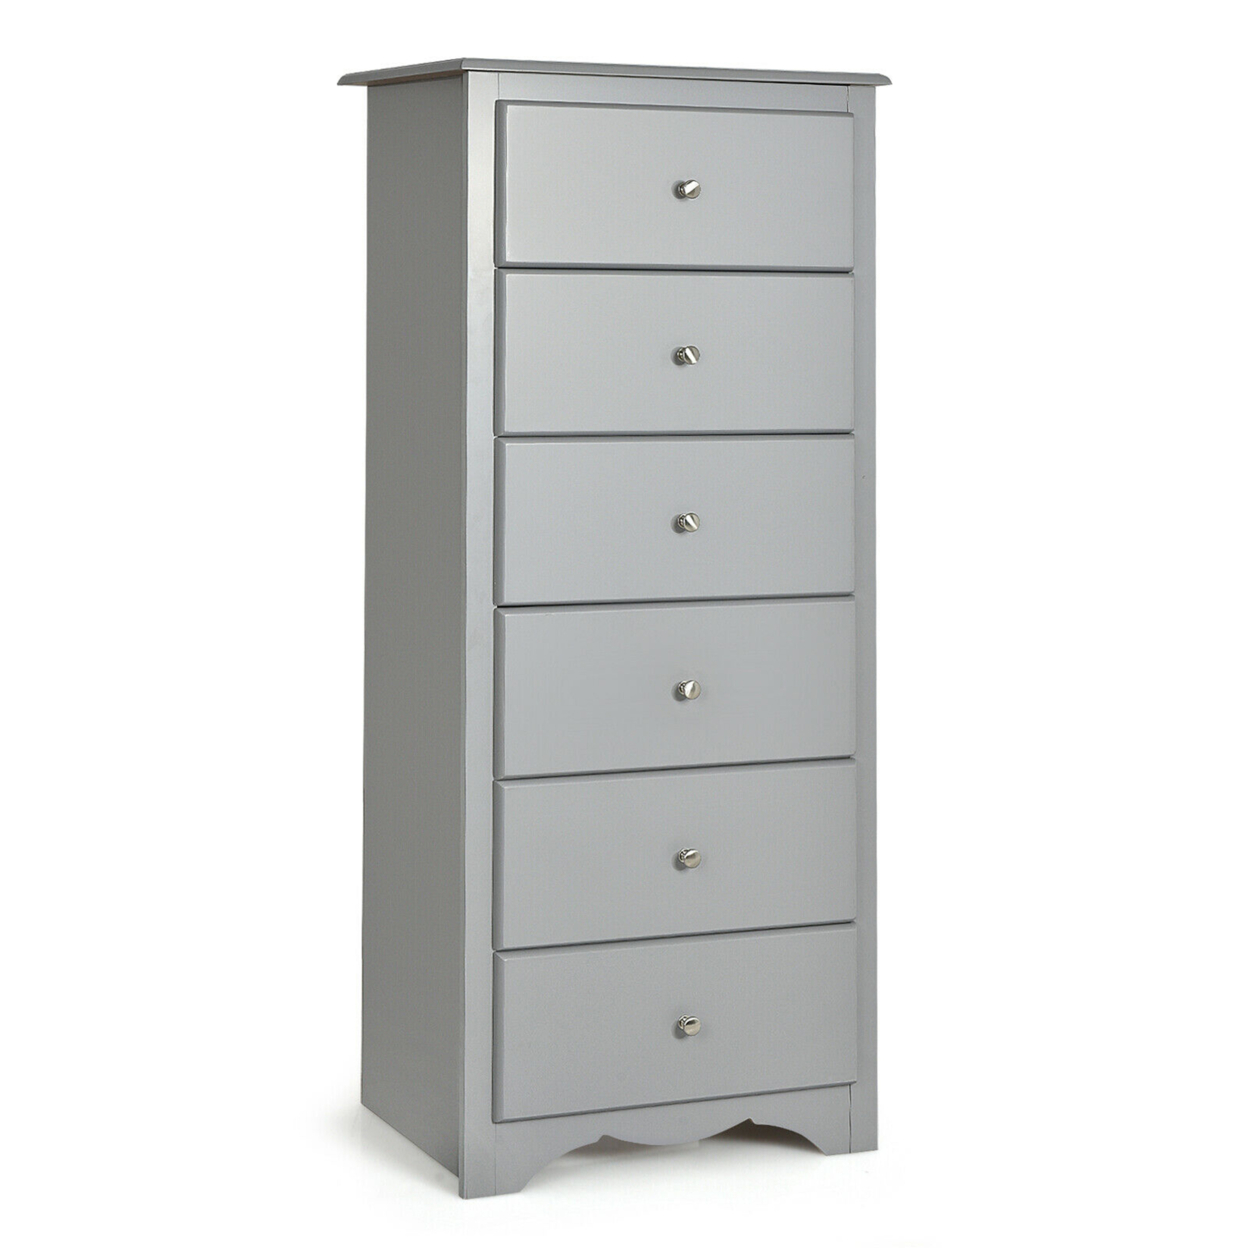 6 Drawer Chest Dresser Clothes Storage Bedroom Tall Furniture Cabinet - Grey